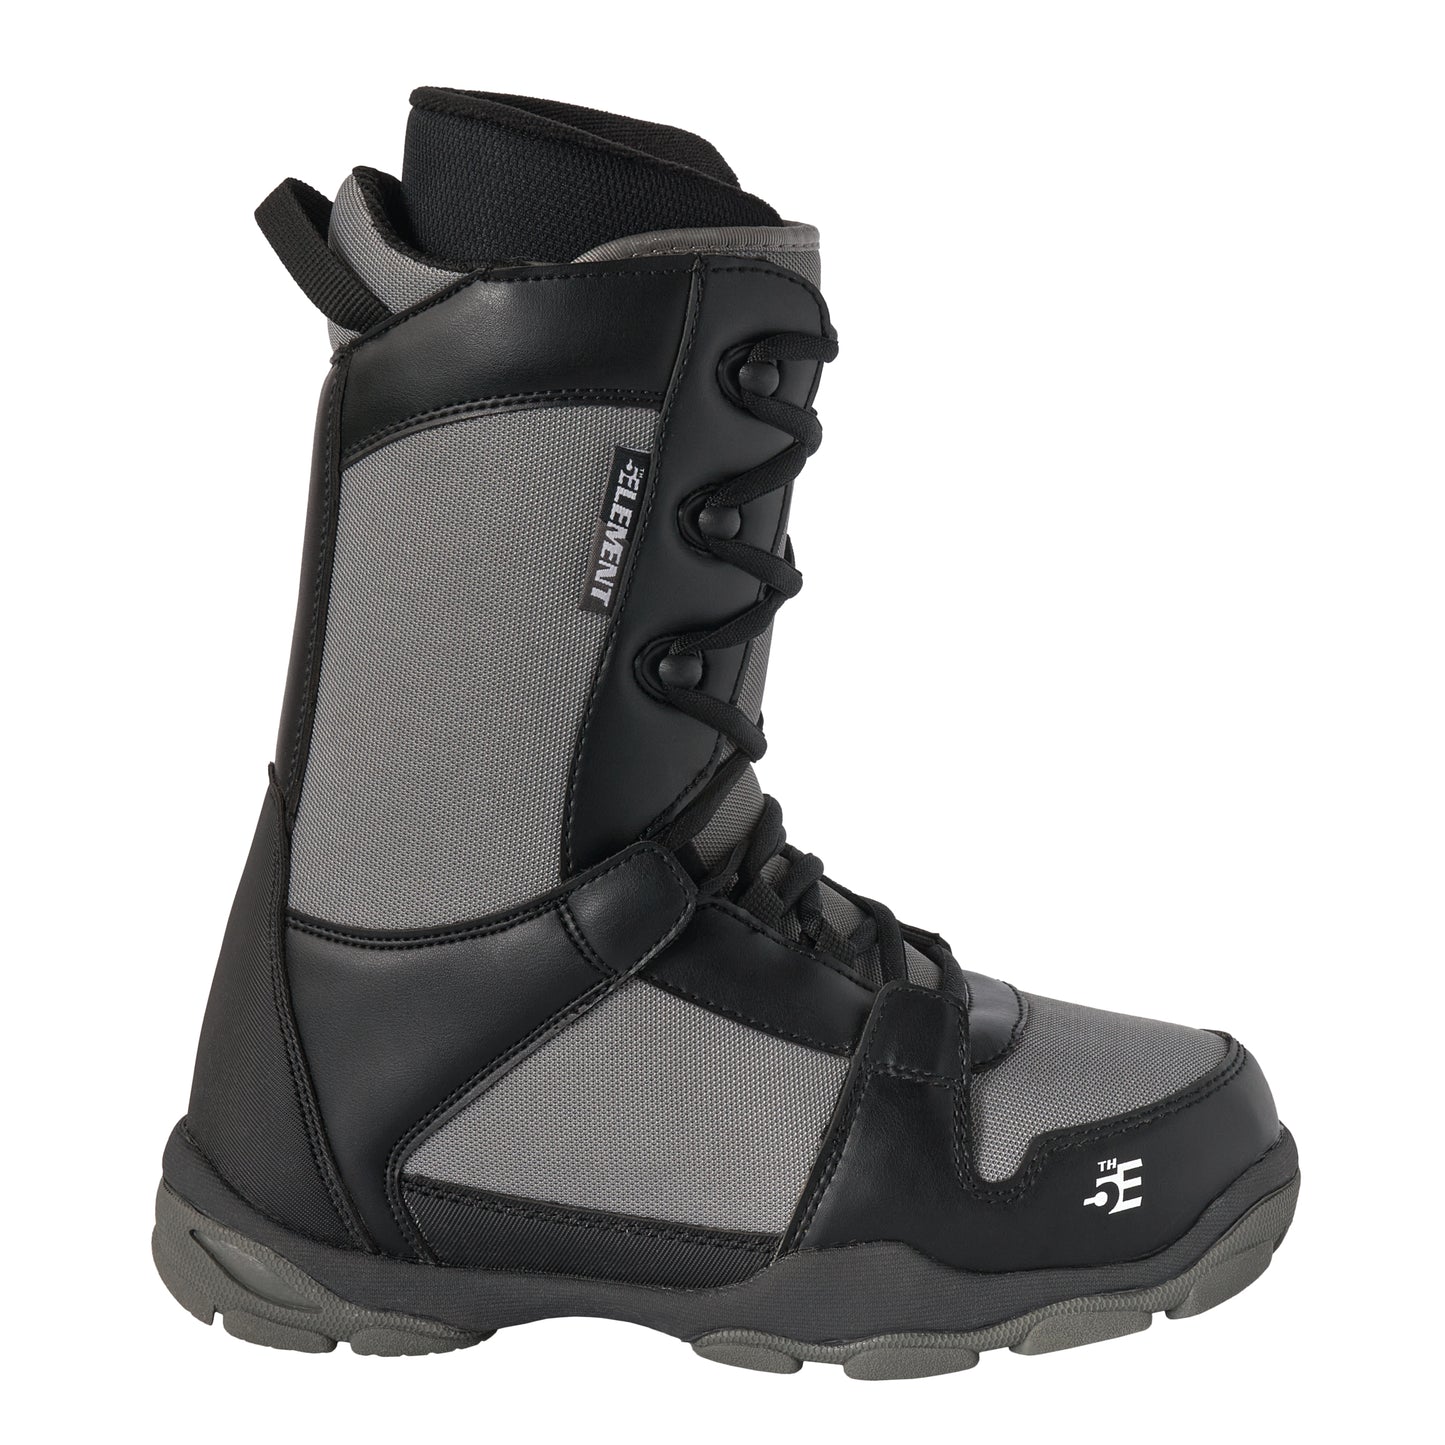 5th Element ST-1 Boots - Grey/Black